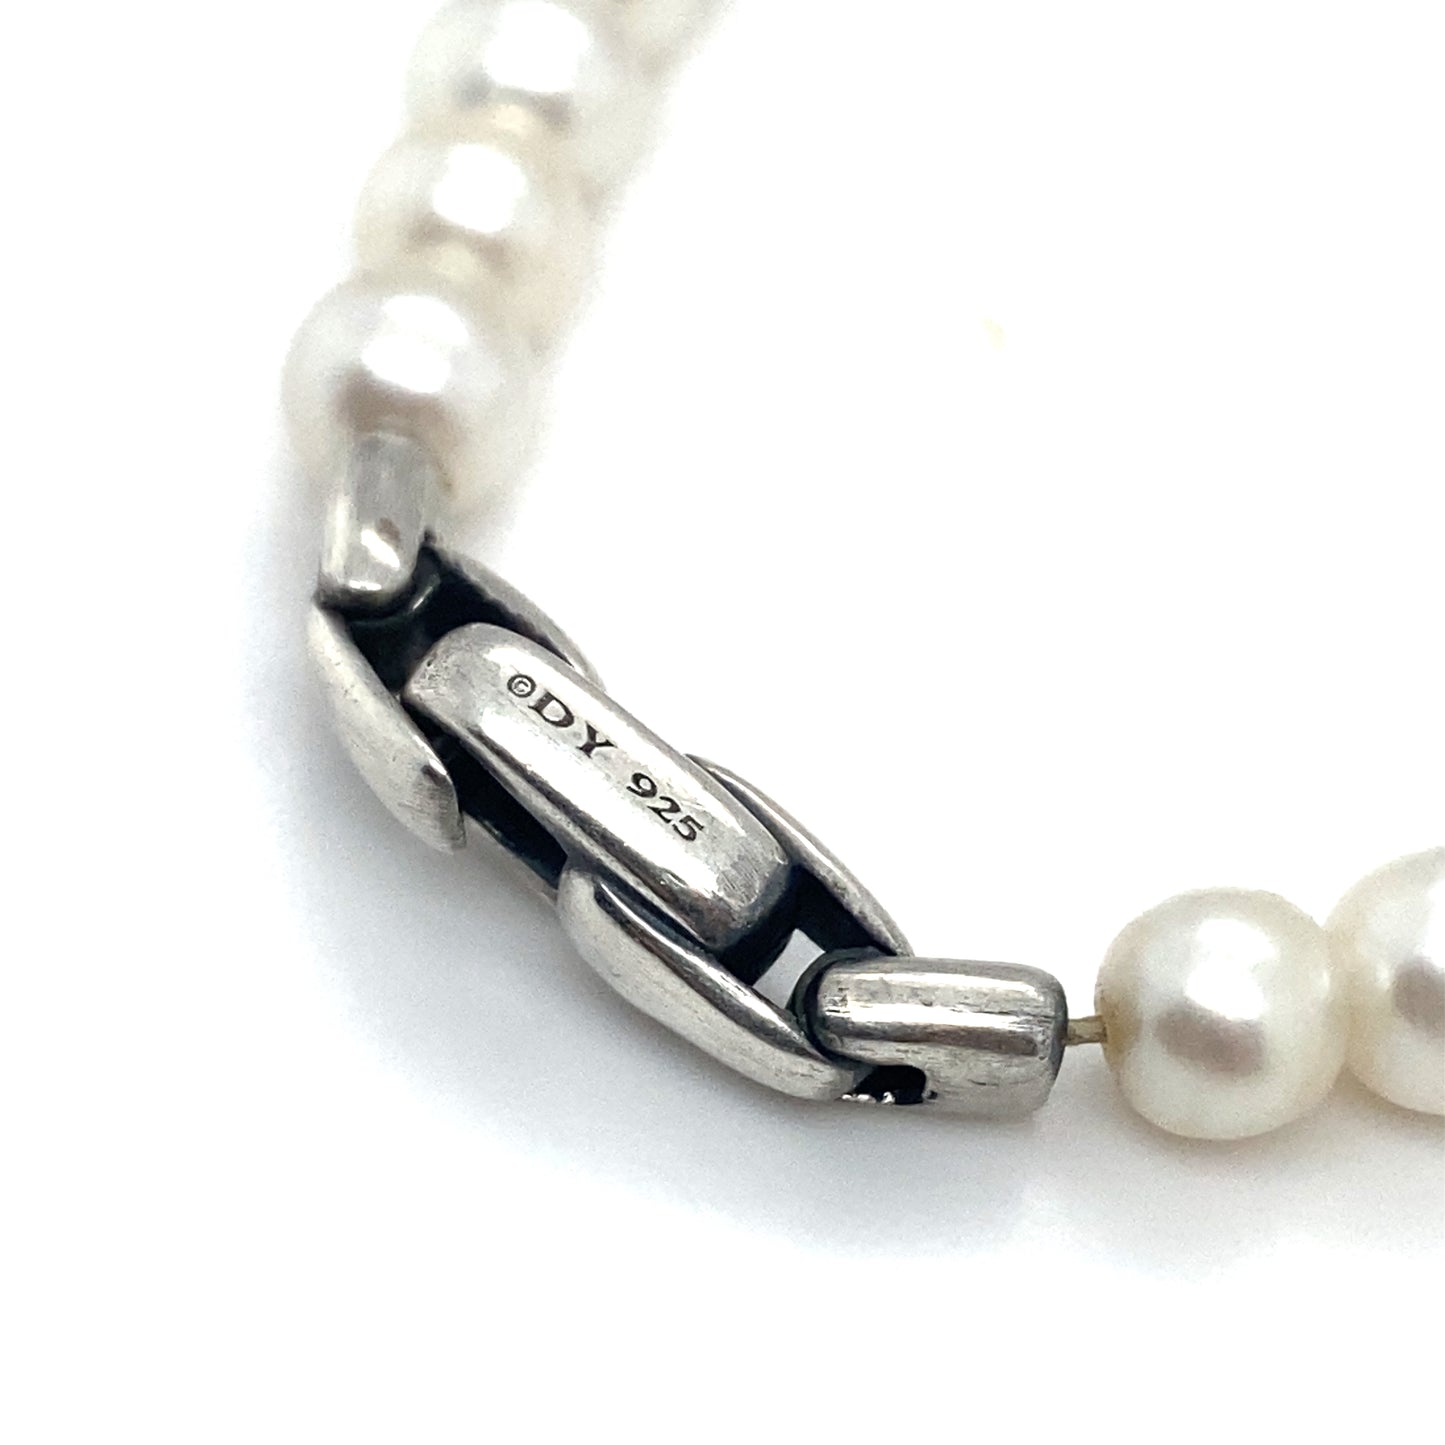 DAVID YURMAN Spiritual Beads Pearl and Black Diamond Bracelet with Silver Clasp